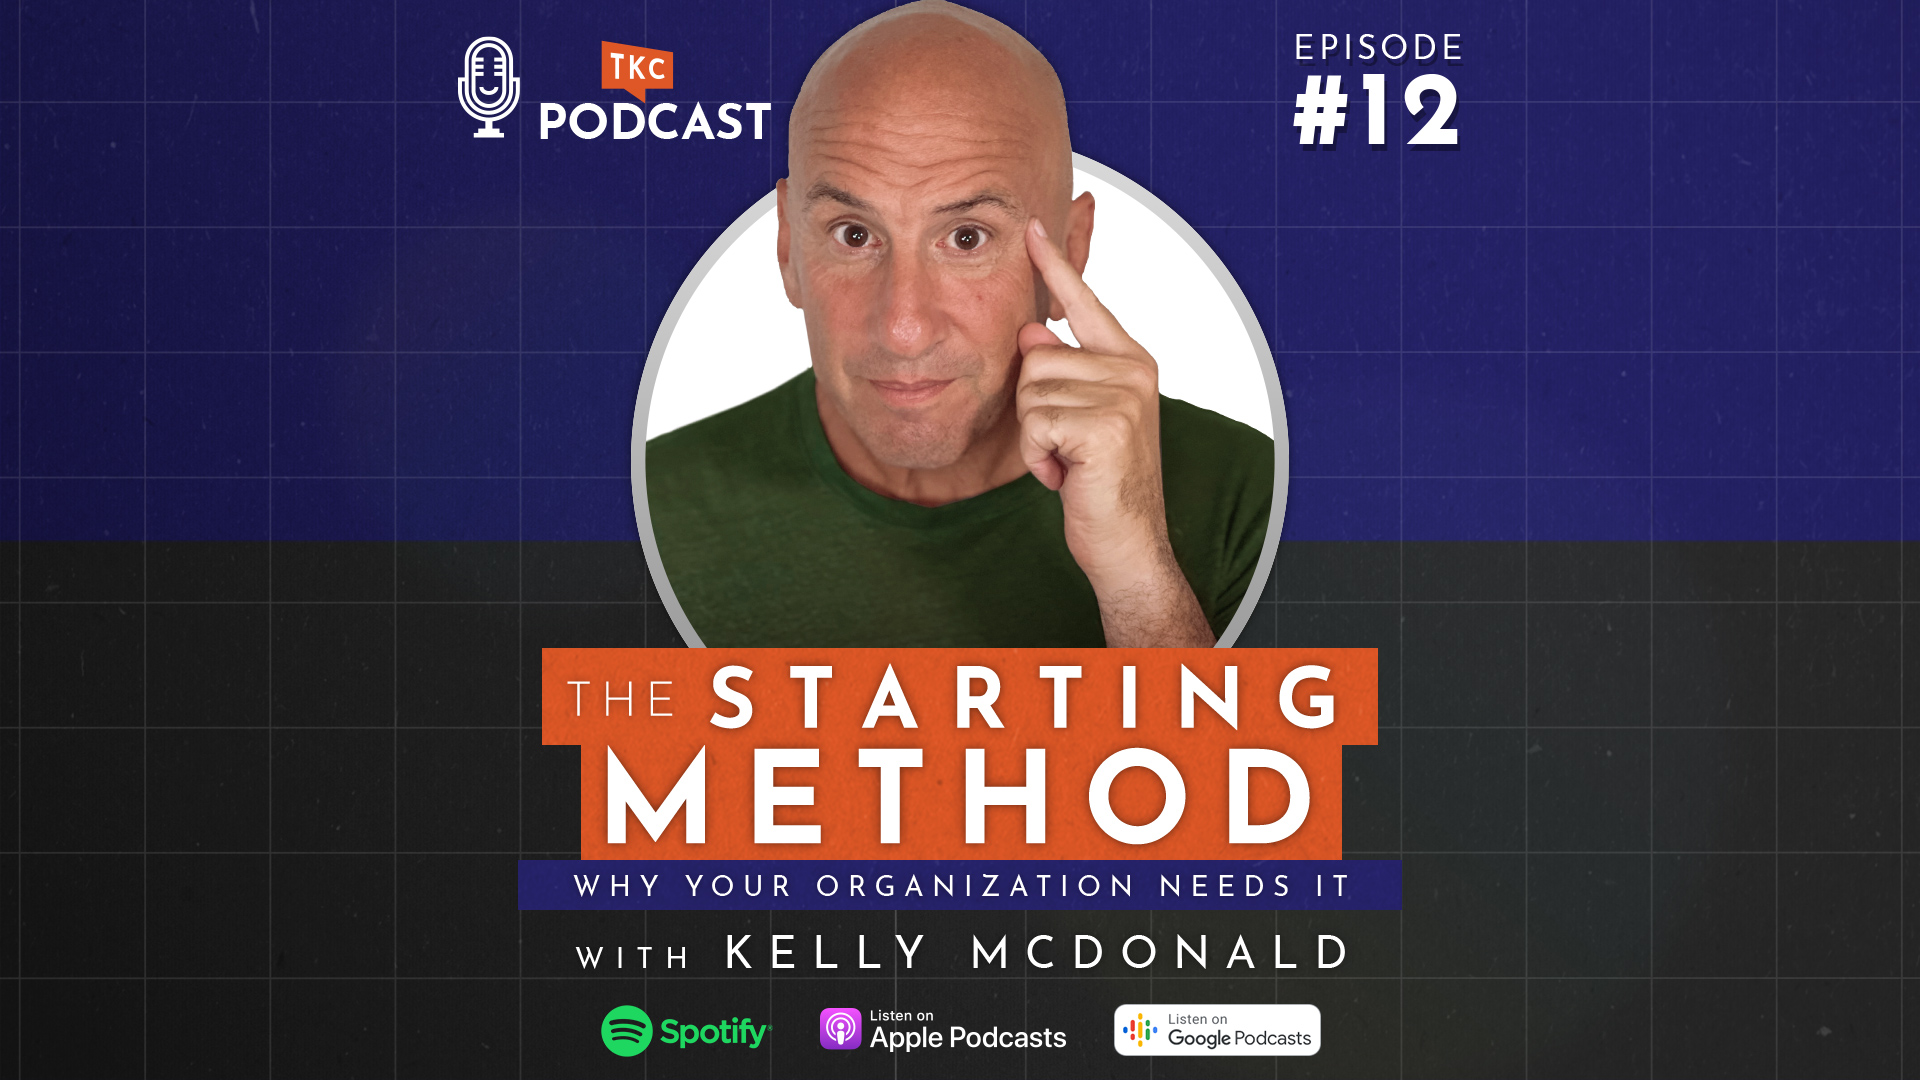 TKC Podcast - Kelly McDonald